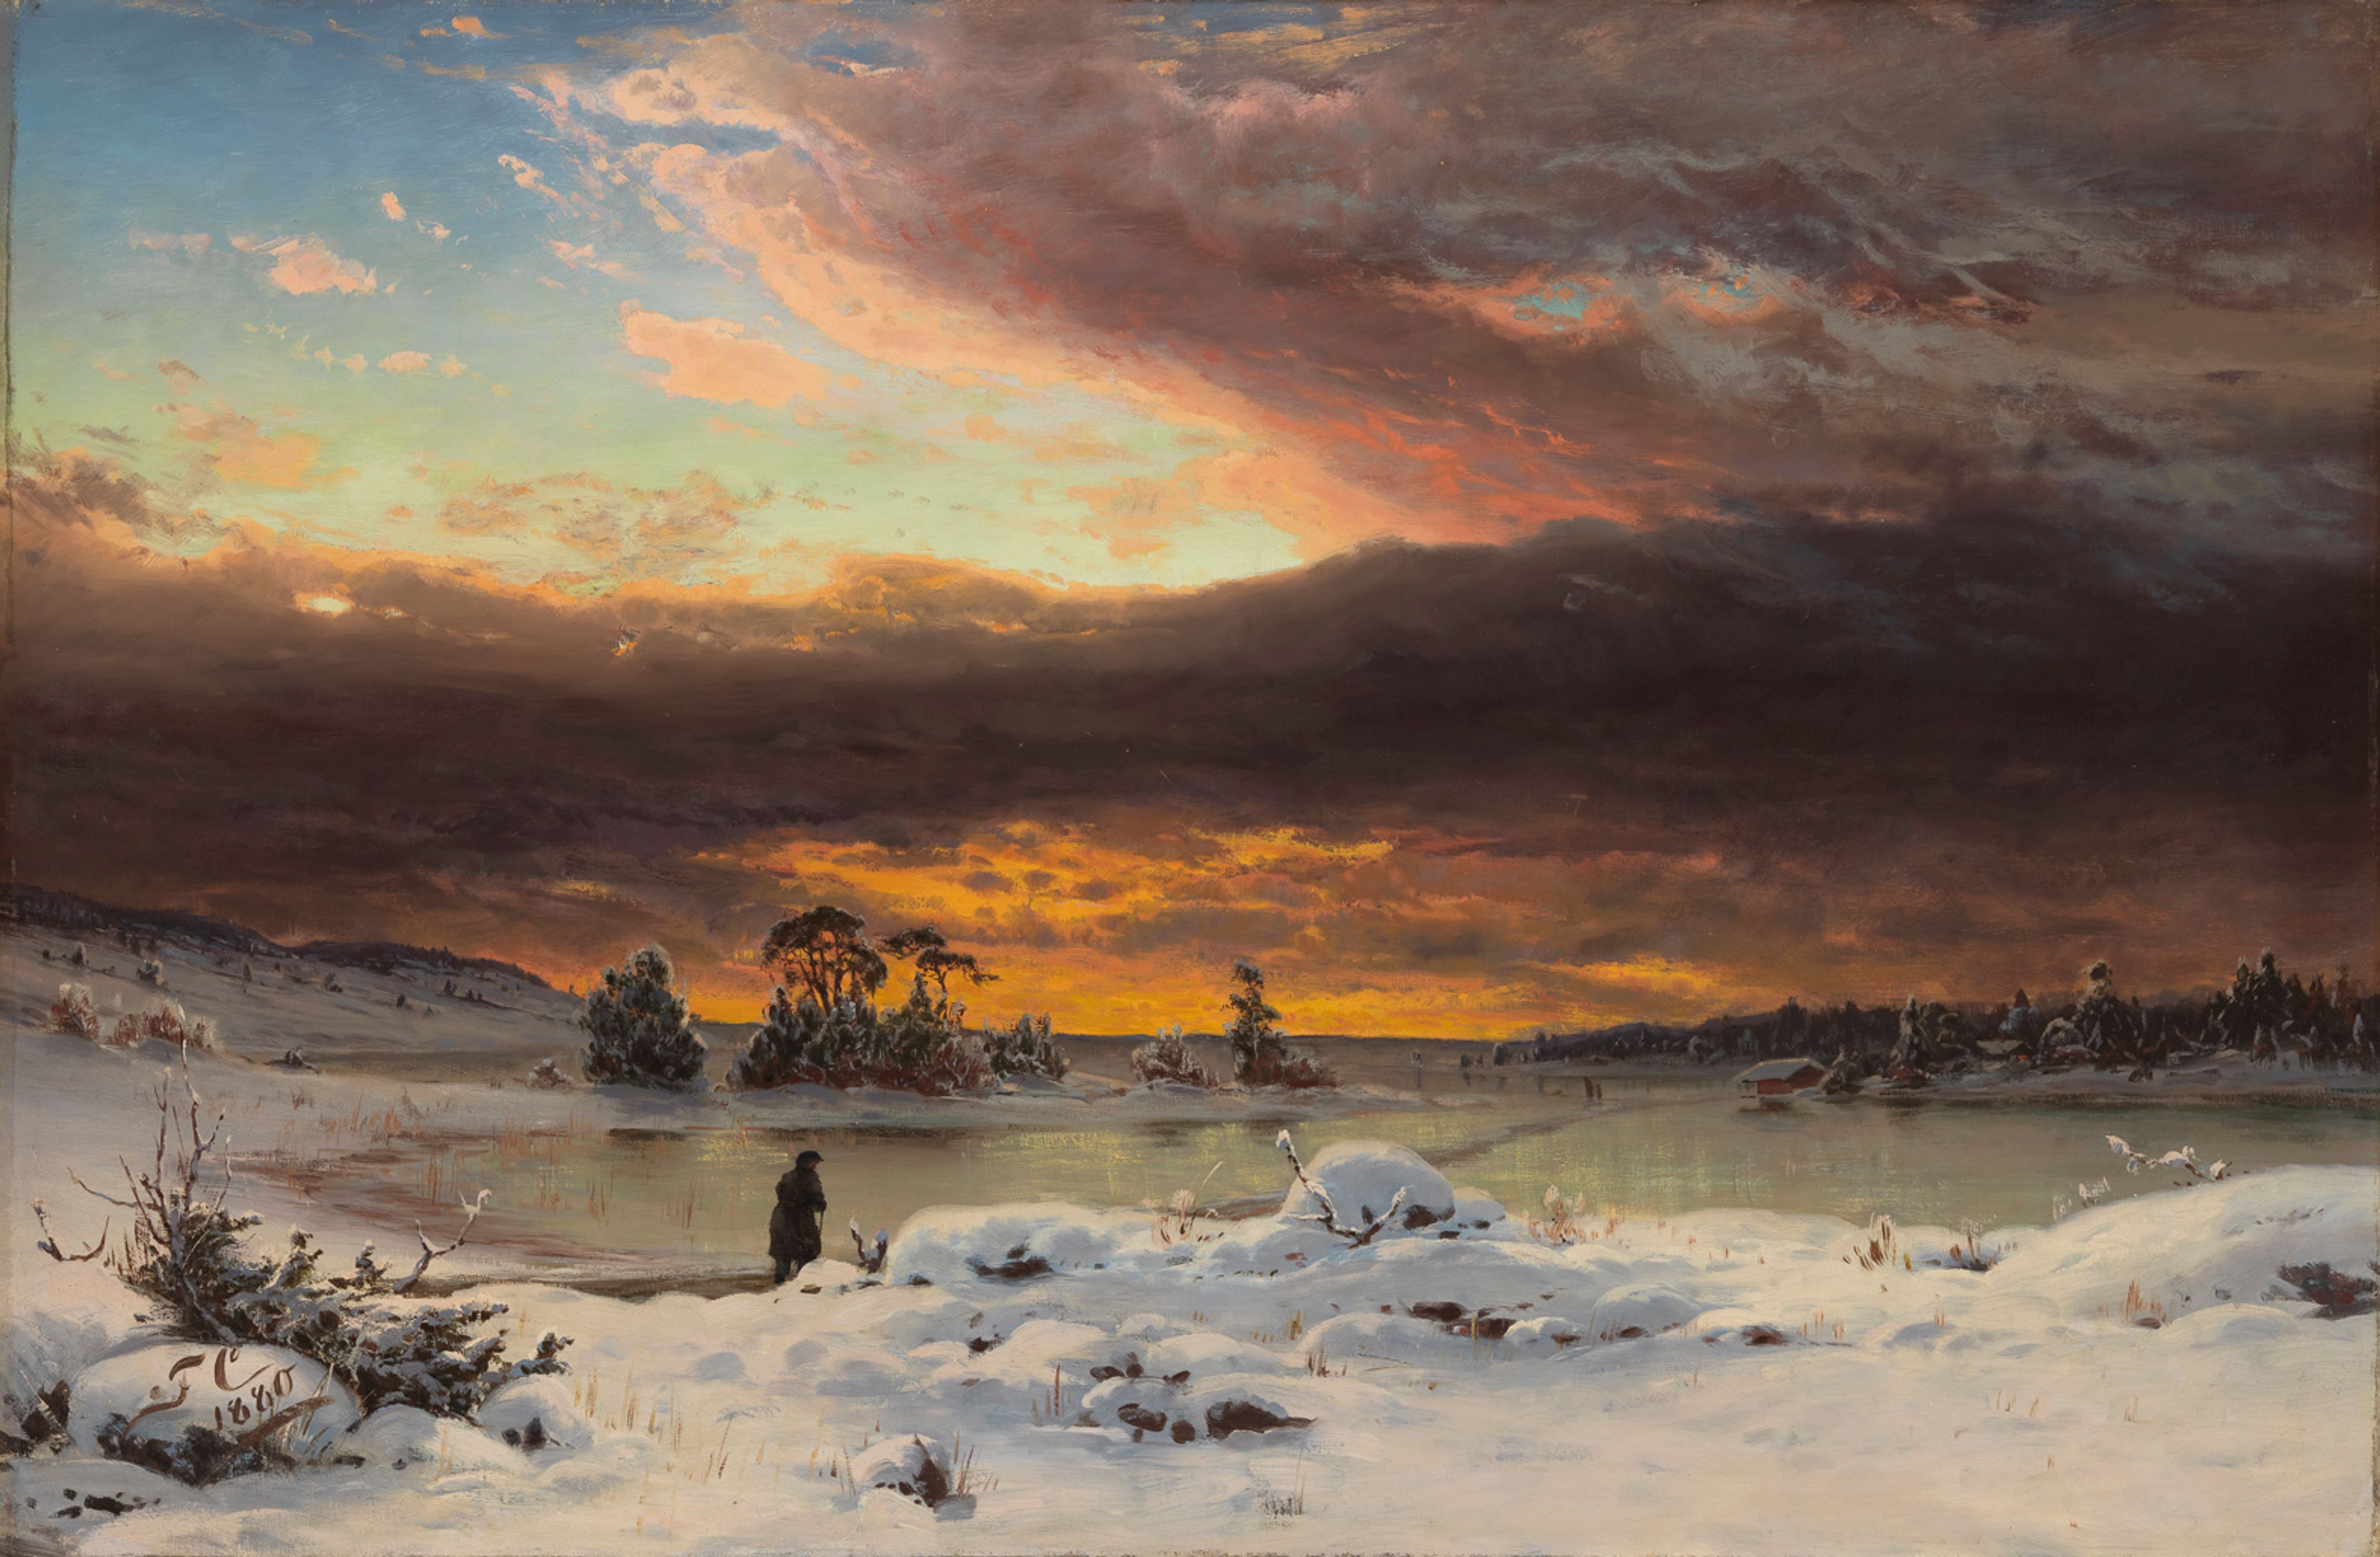 Winterlandschap, avondsfeer by Fanny Churberg - 1880 - 73.5 x 105 cm 